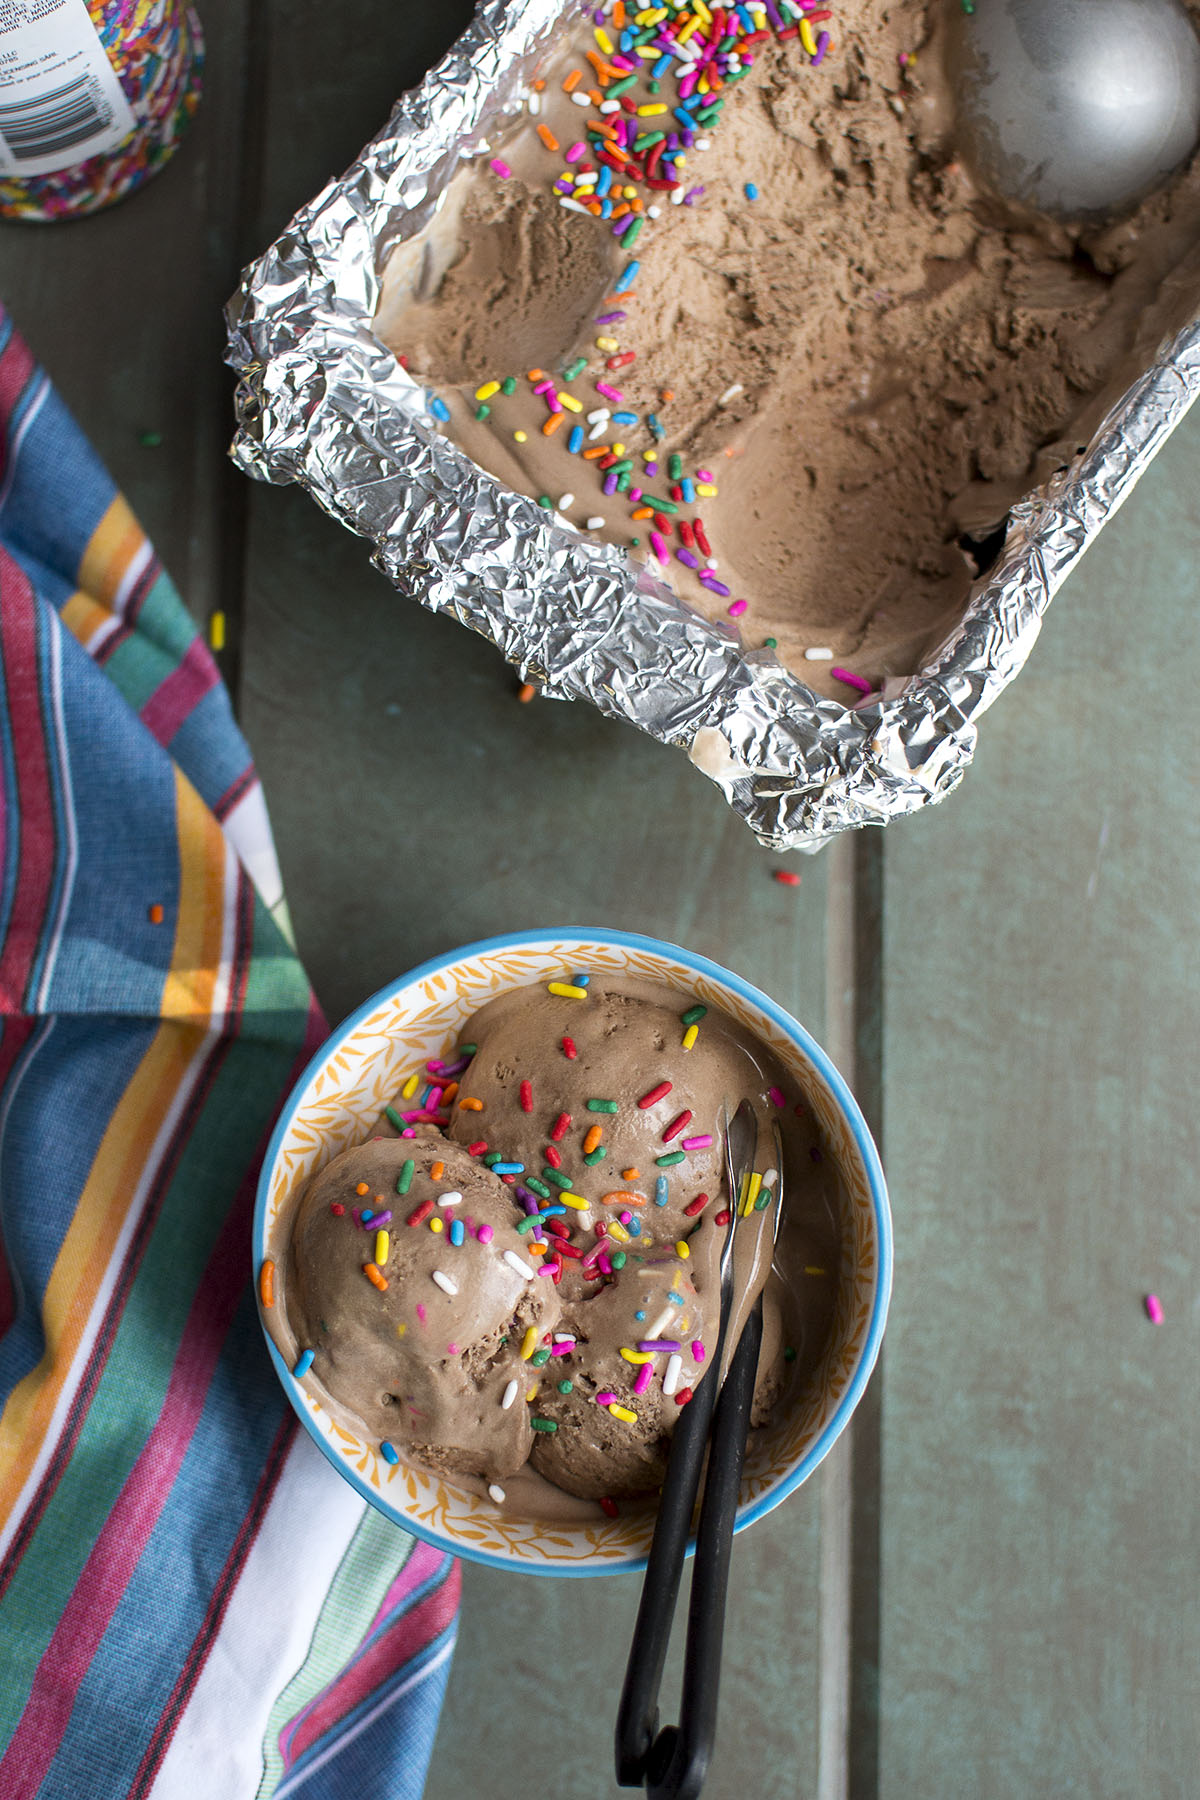 White bowl with 3 scoops of rainbow dash ice cream